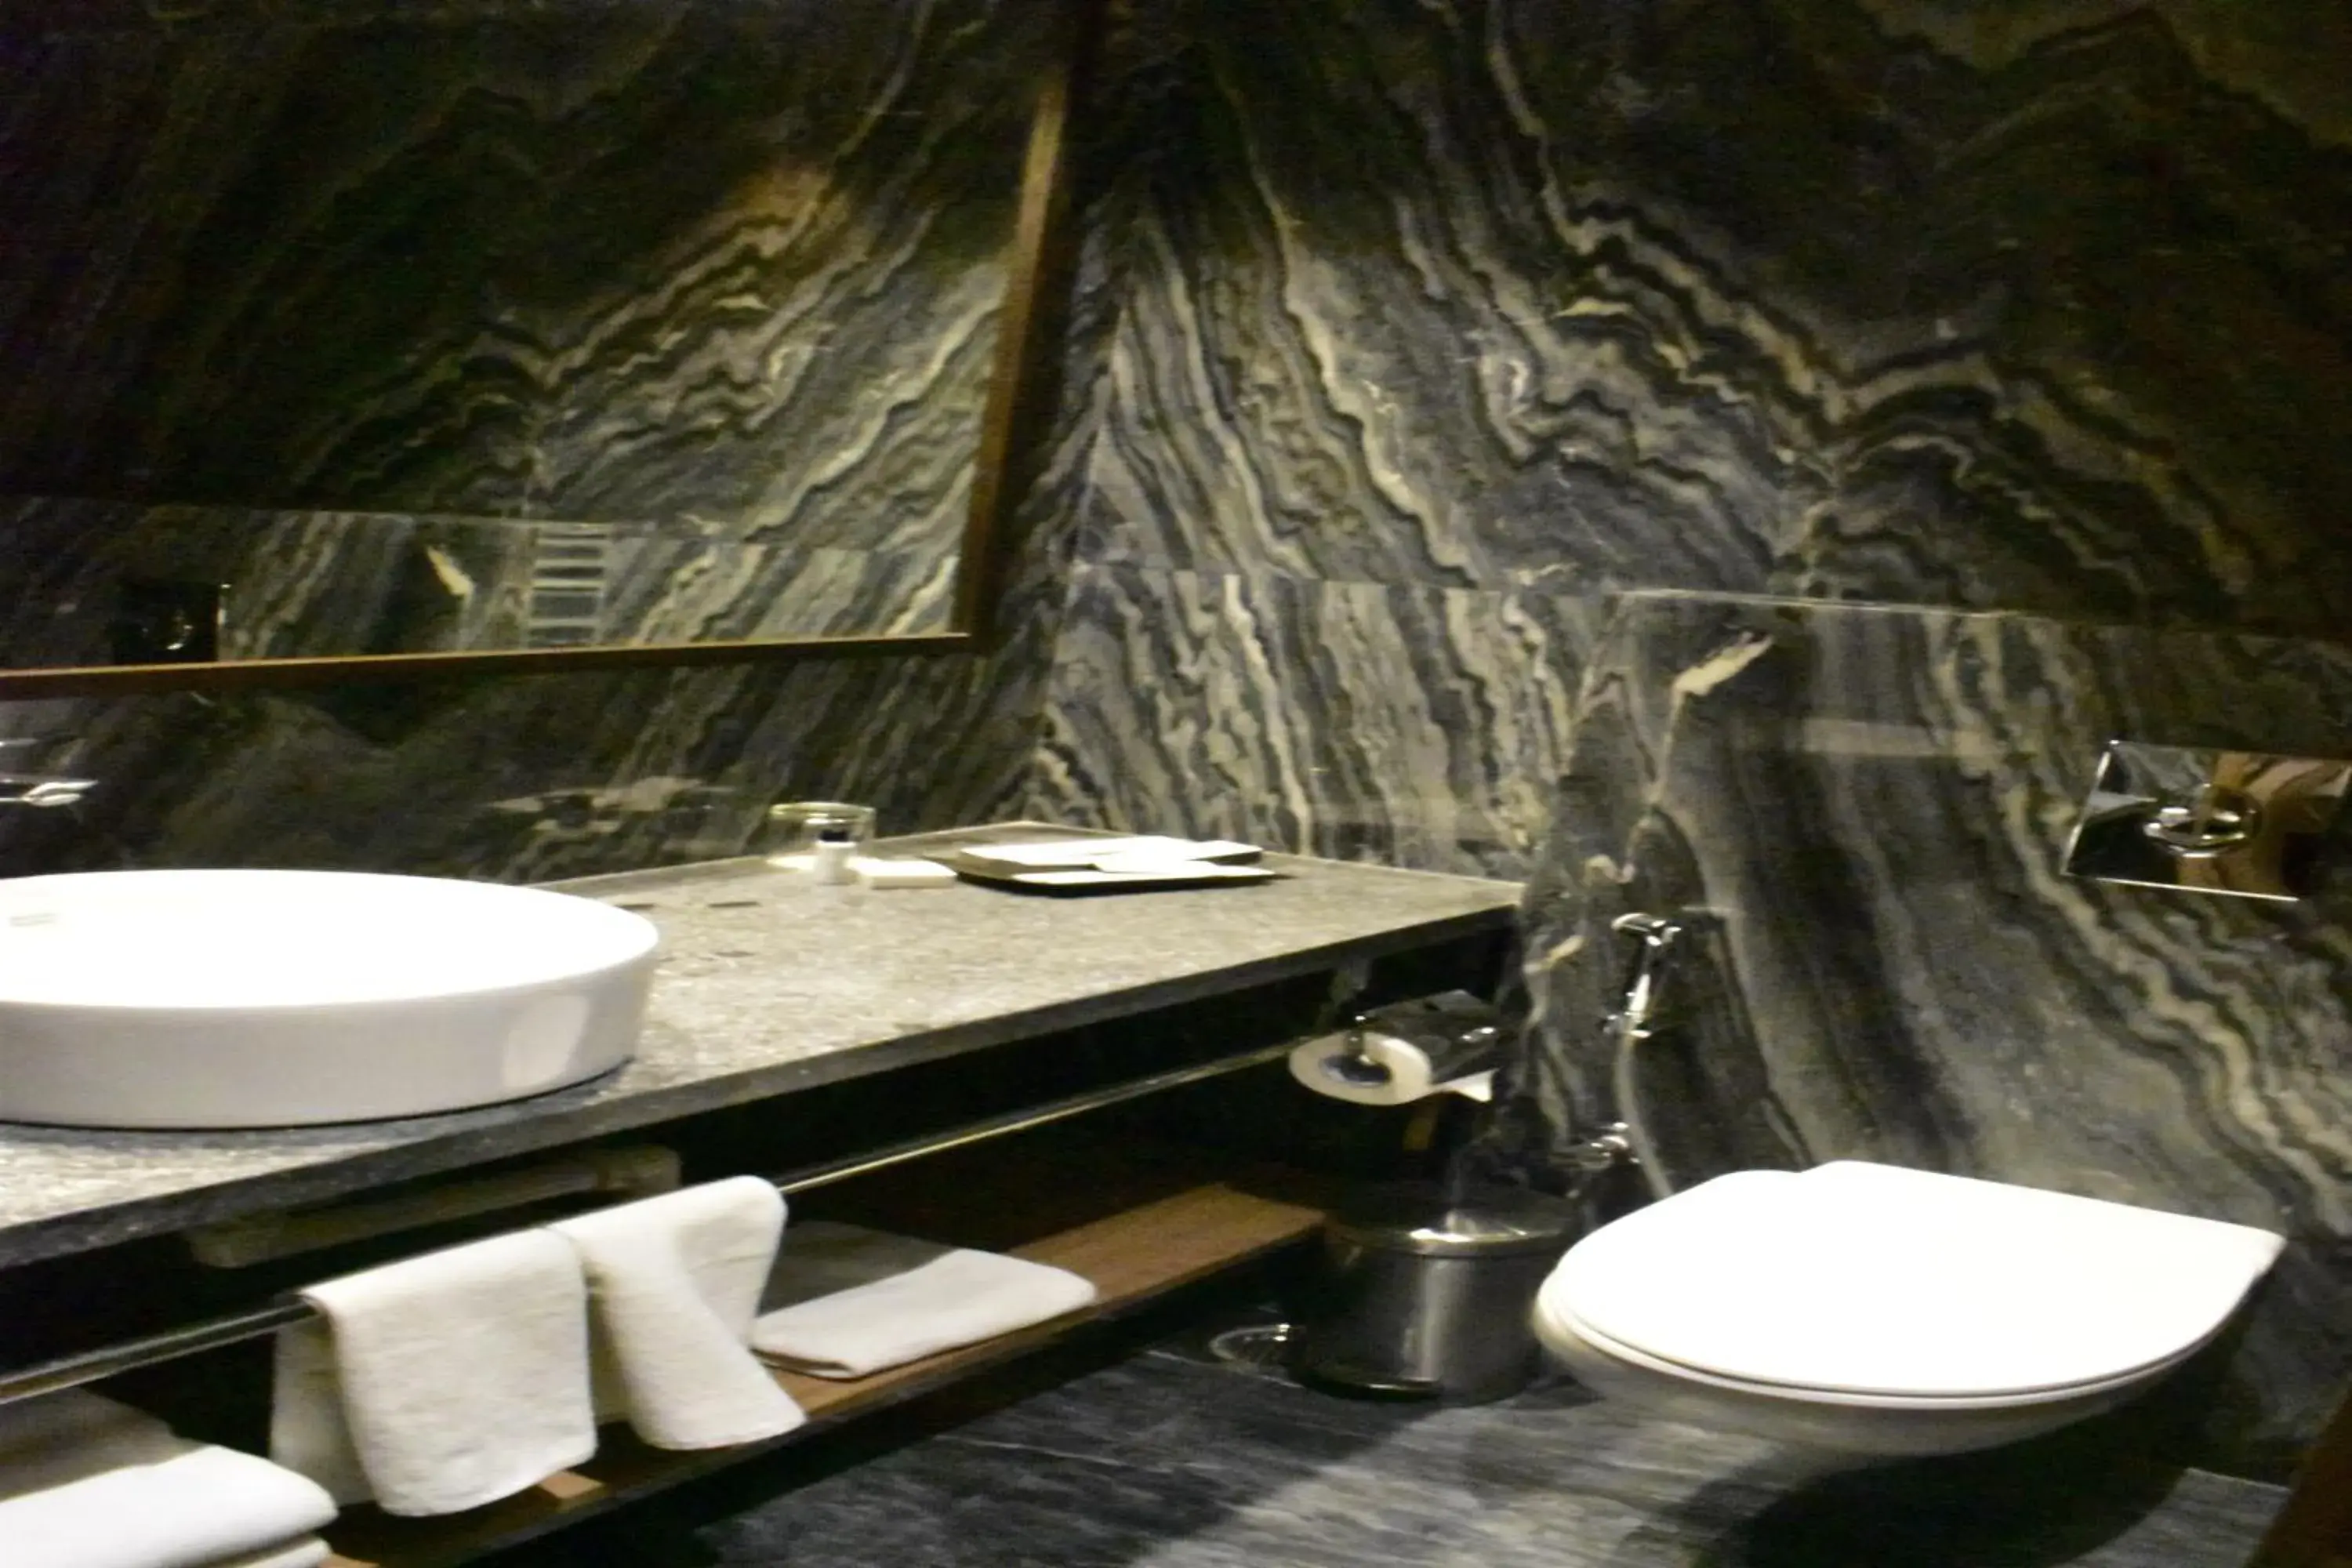 Bathroom in Oxford Golf Resort